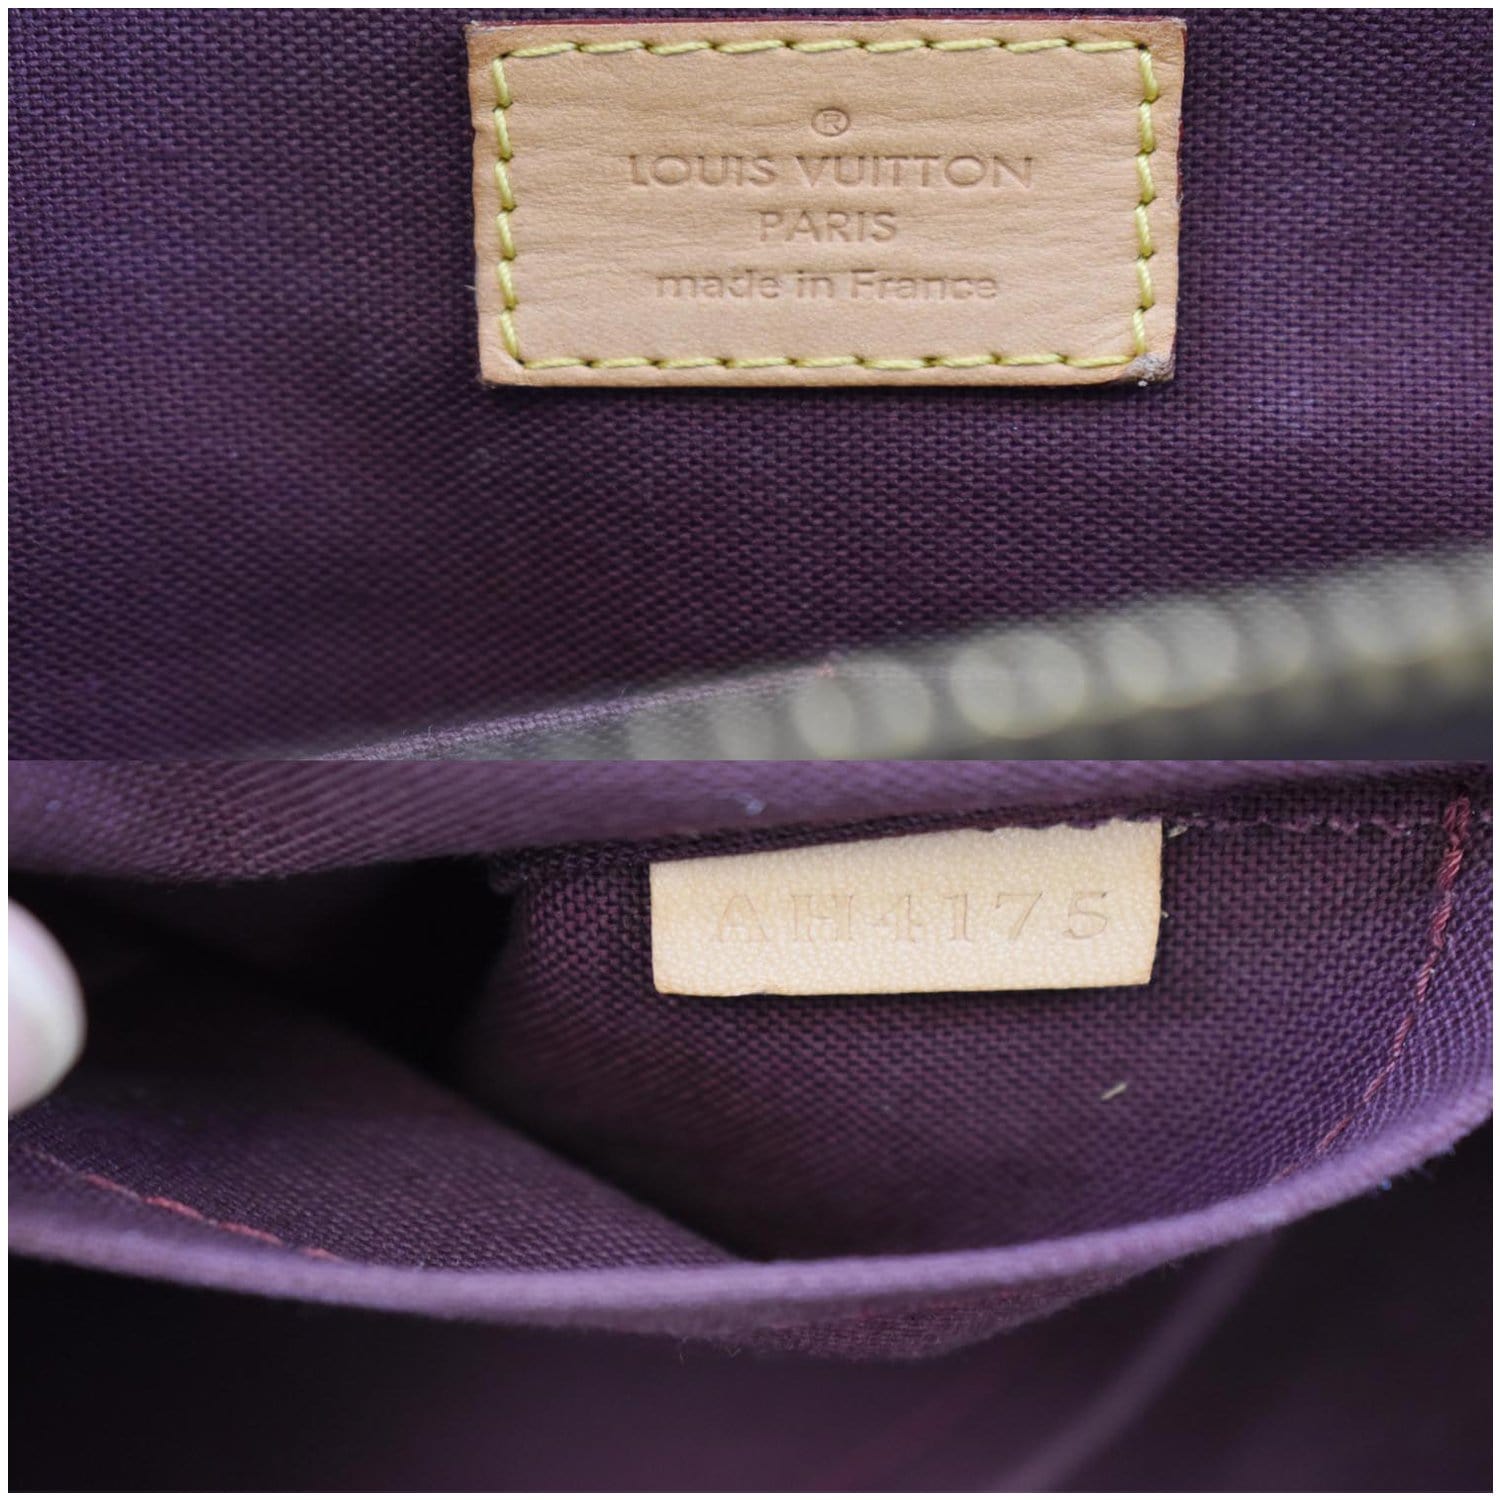 Turenne medium size handbag by Louis Vuitton <3 #losangeles #handbag #bag # louisvuitton